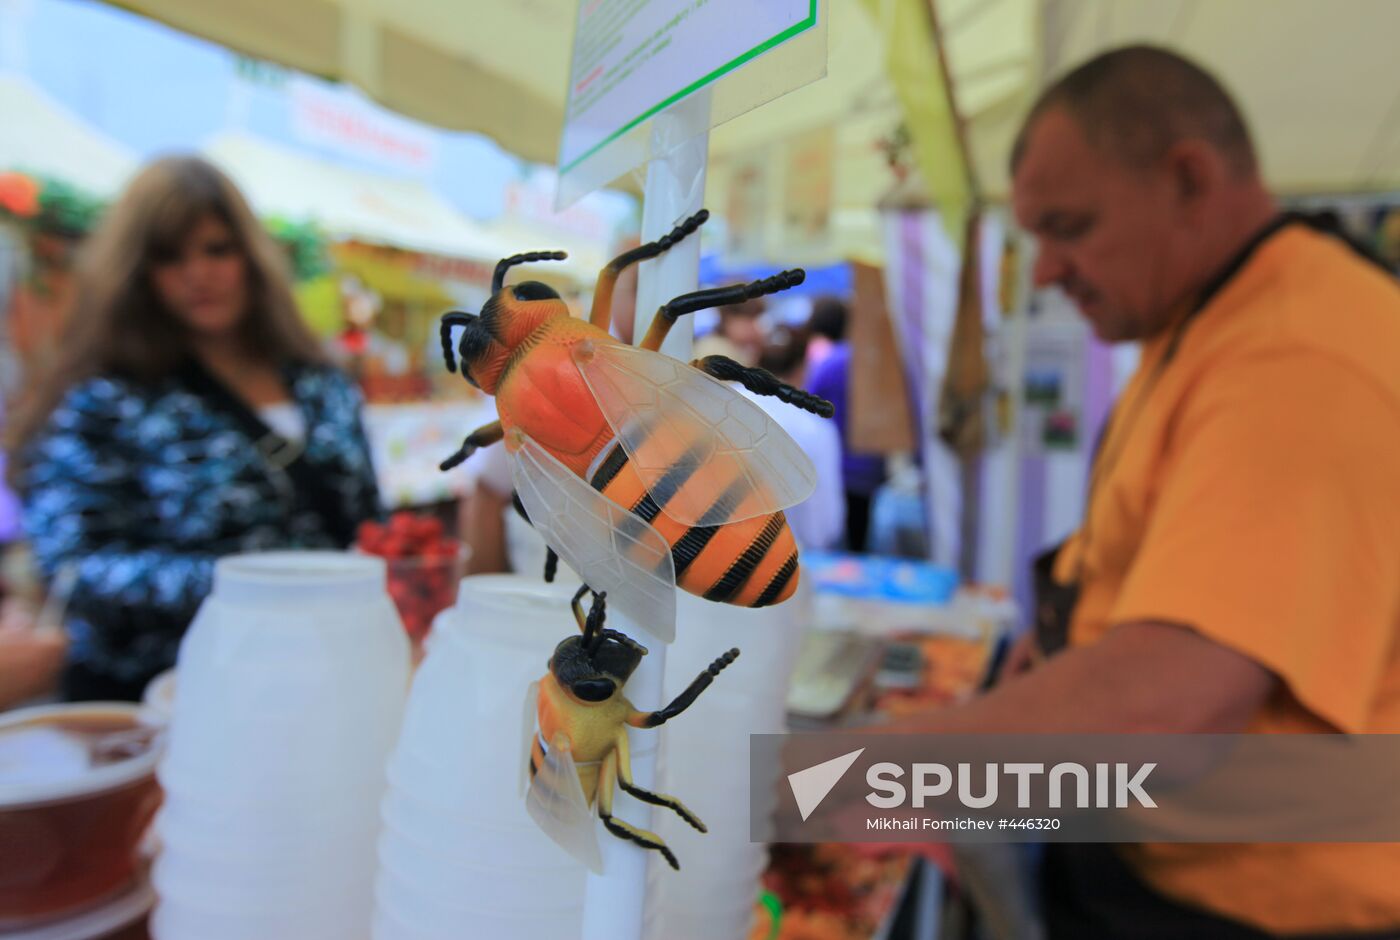 Honey fair in Tsaritsyno, Moscow